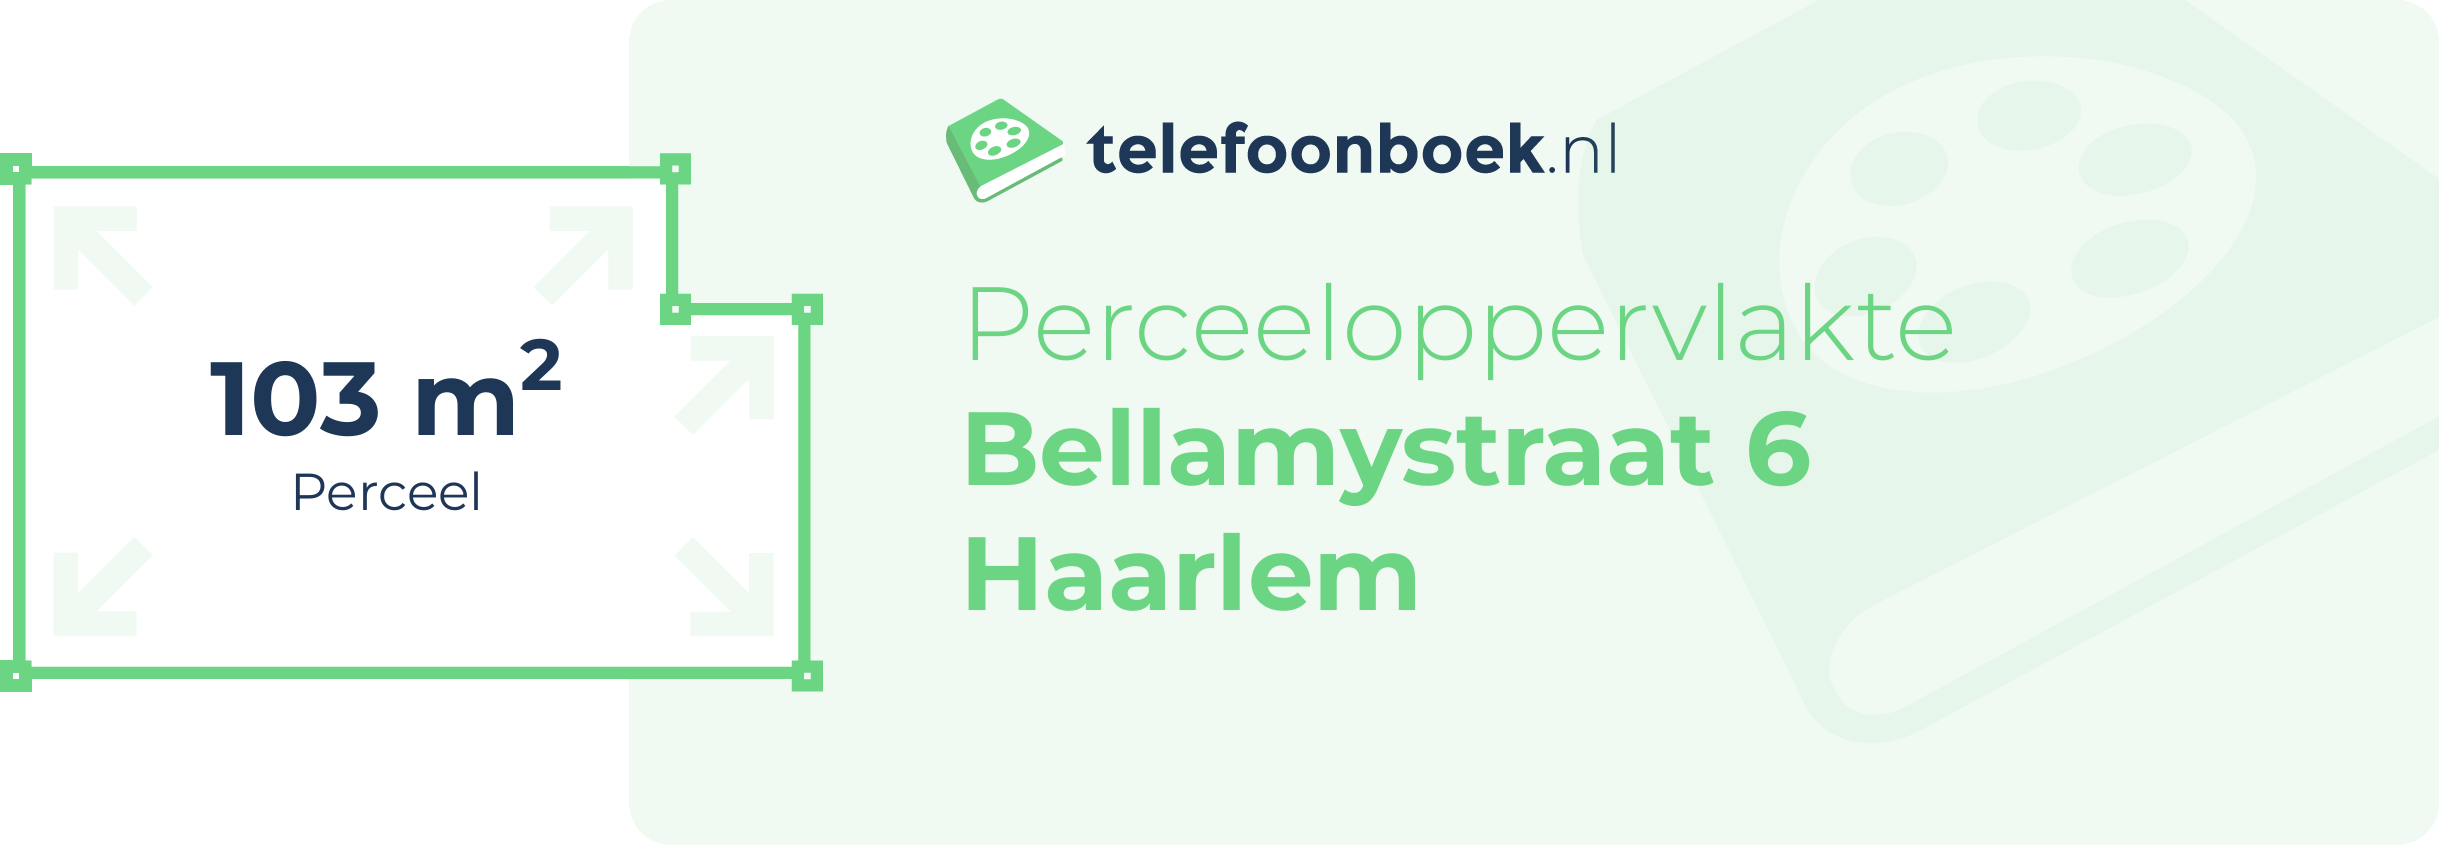 Perceeloppervlakte Bellamystraat 6 Haarlem